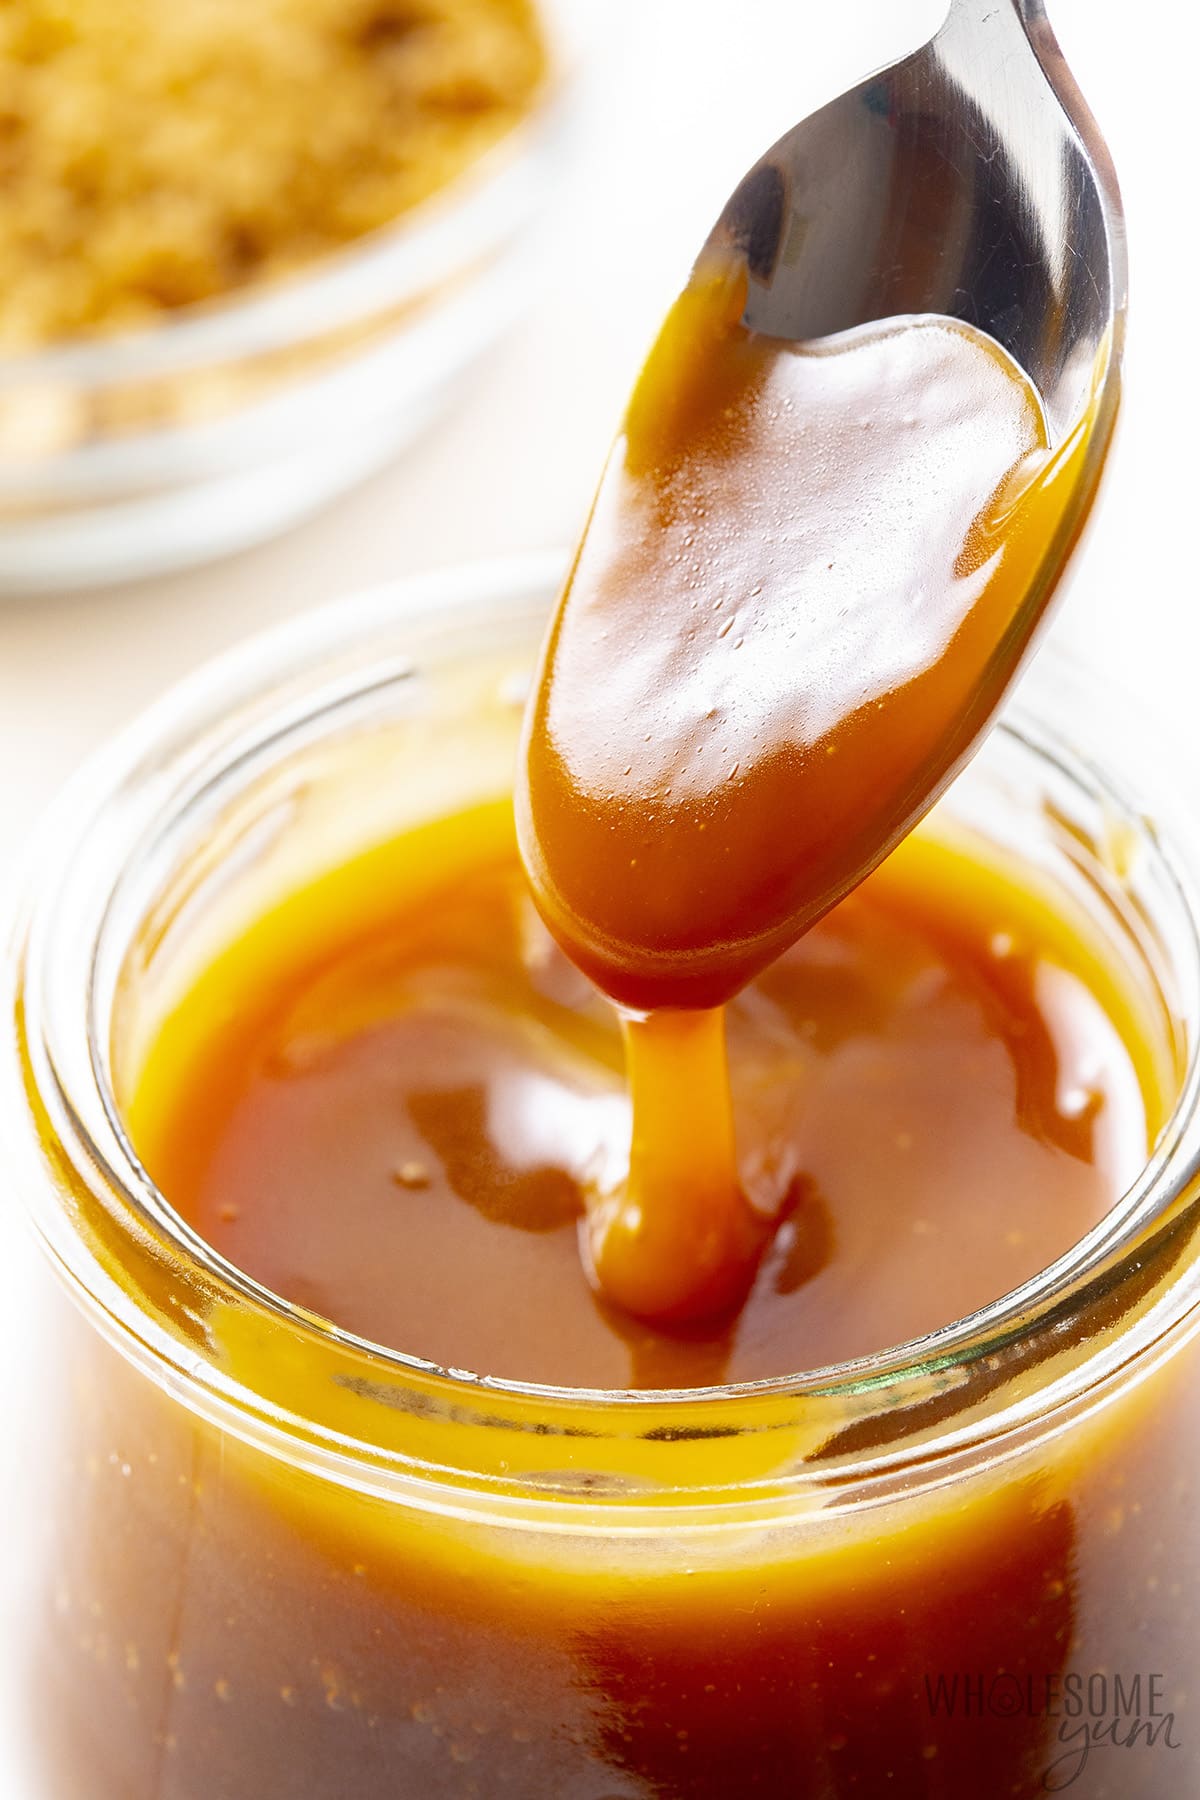 Sugar-free caramel sauce on a spoon.